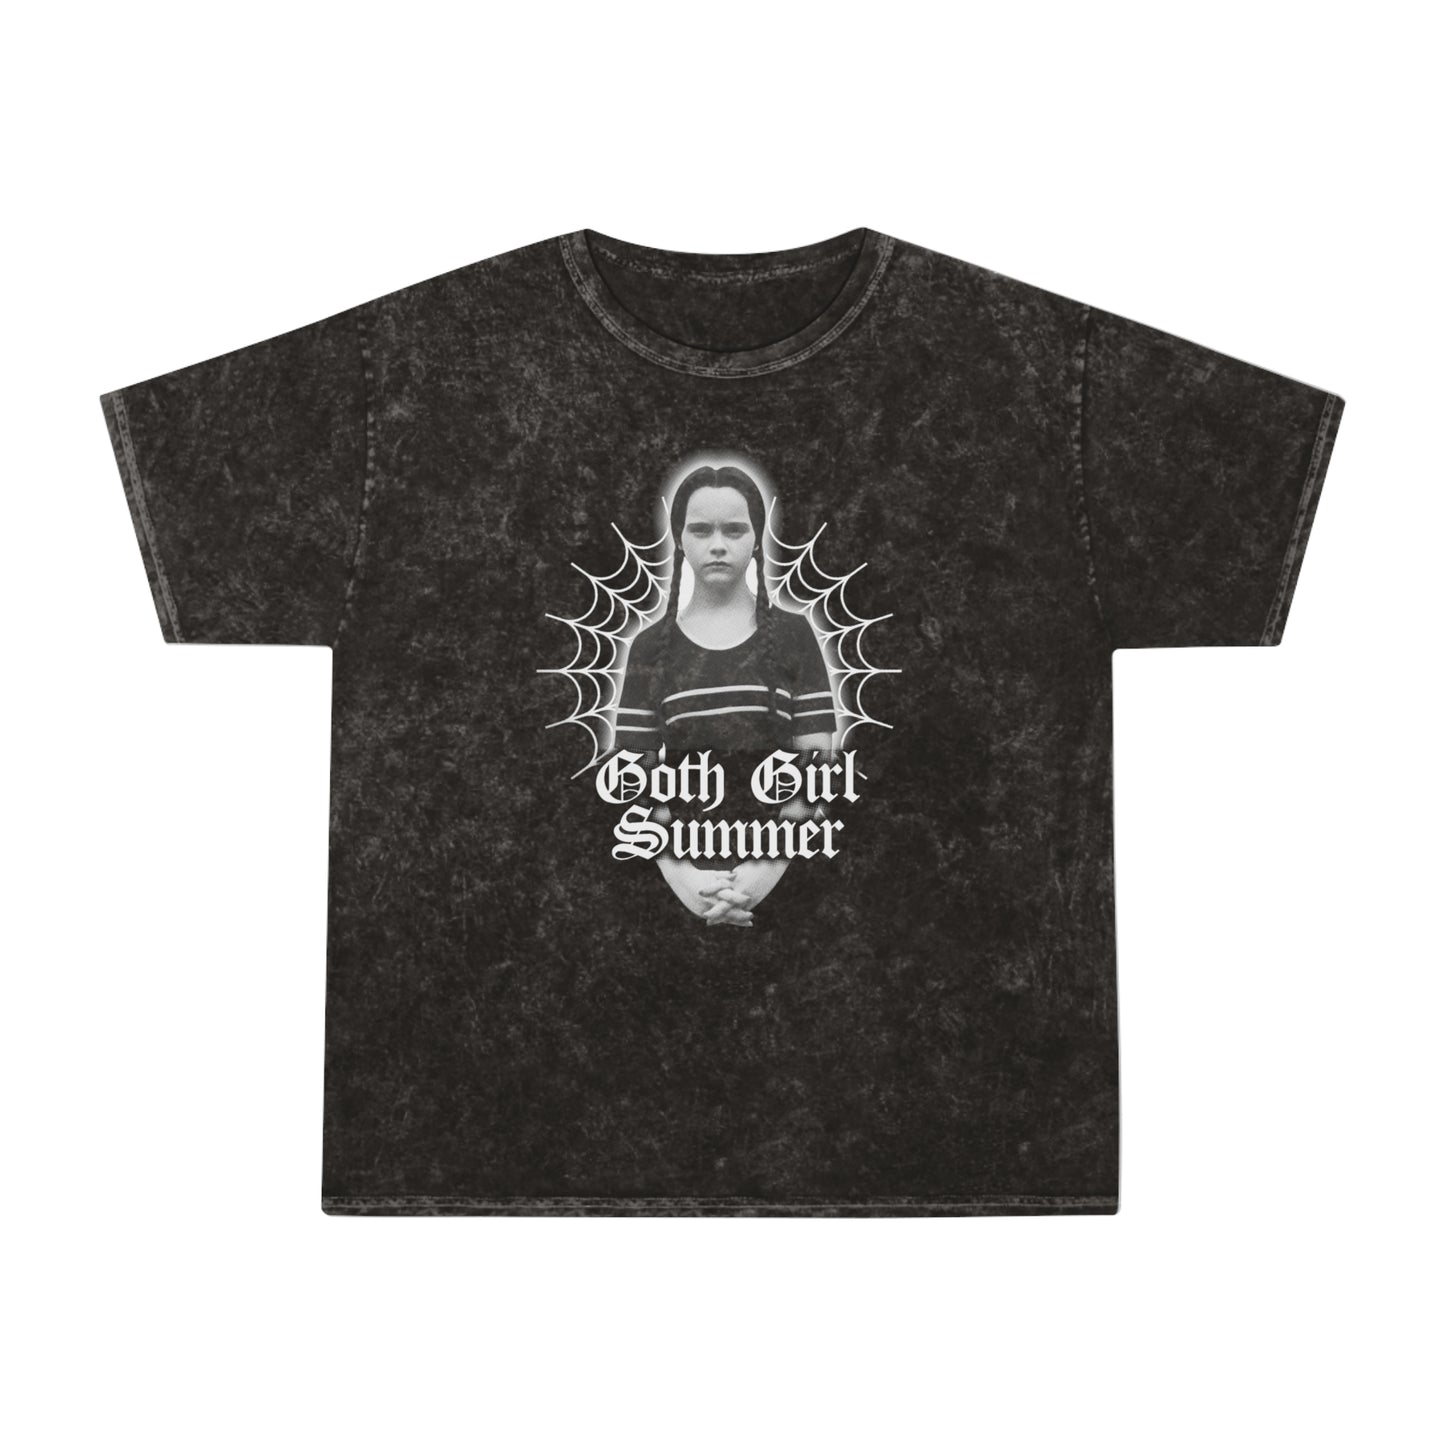 Goth Girl Summer mineral wash t-shirt